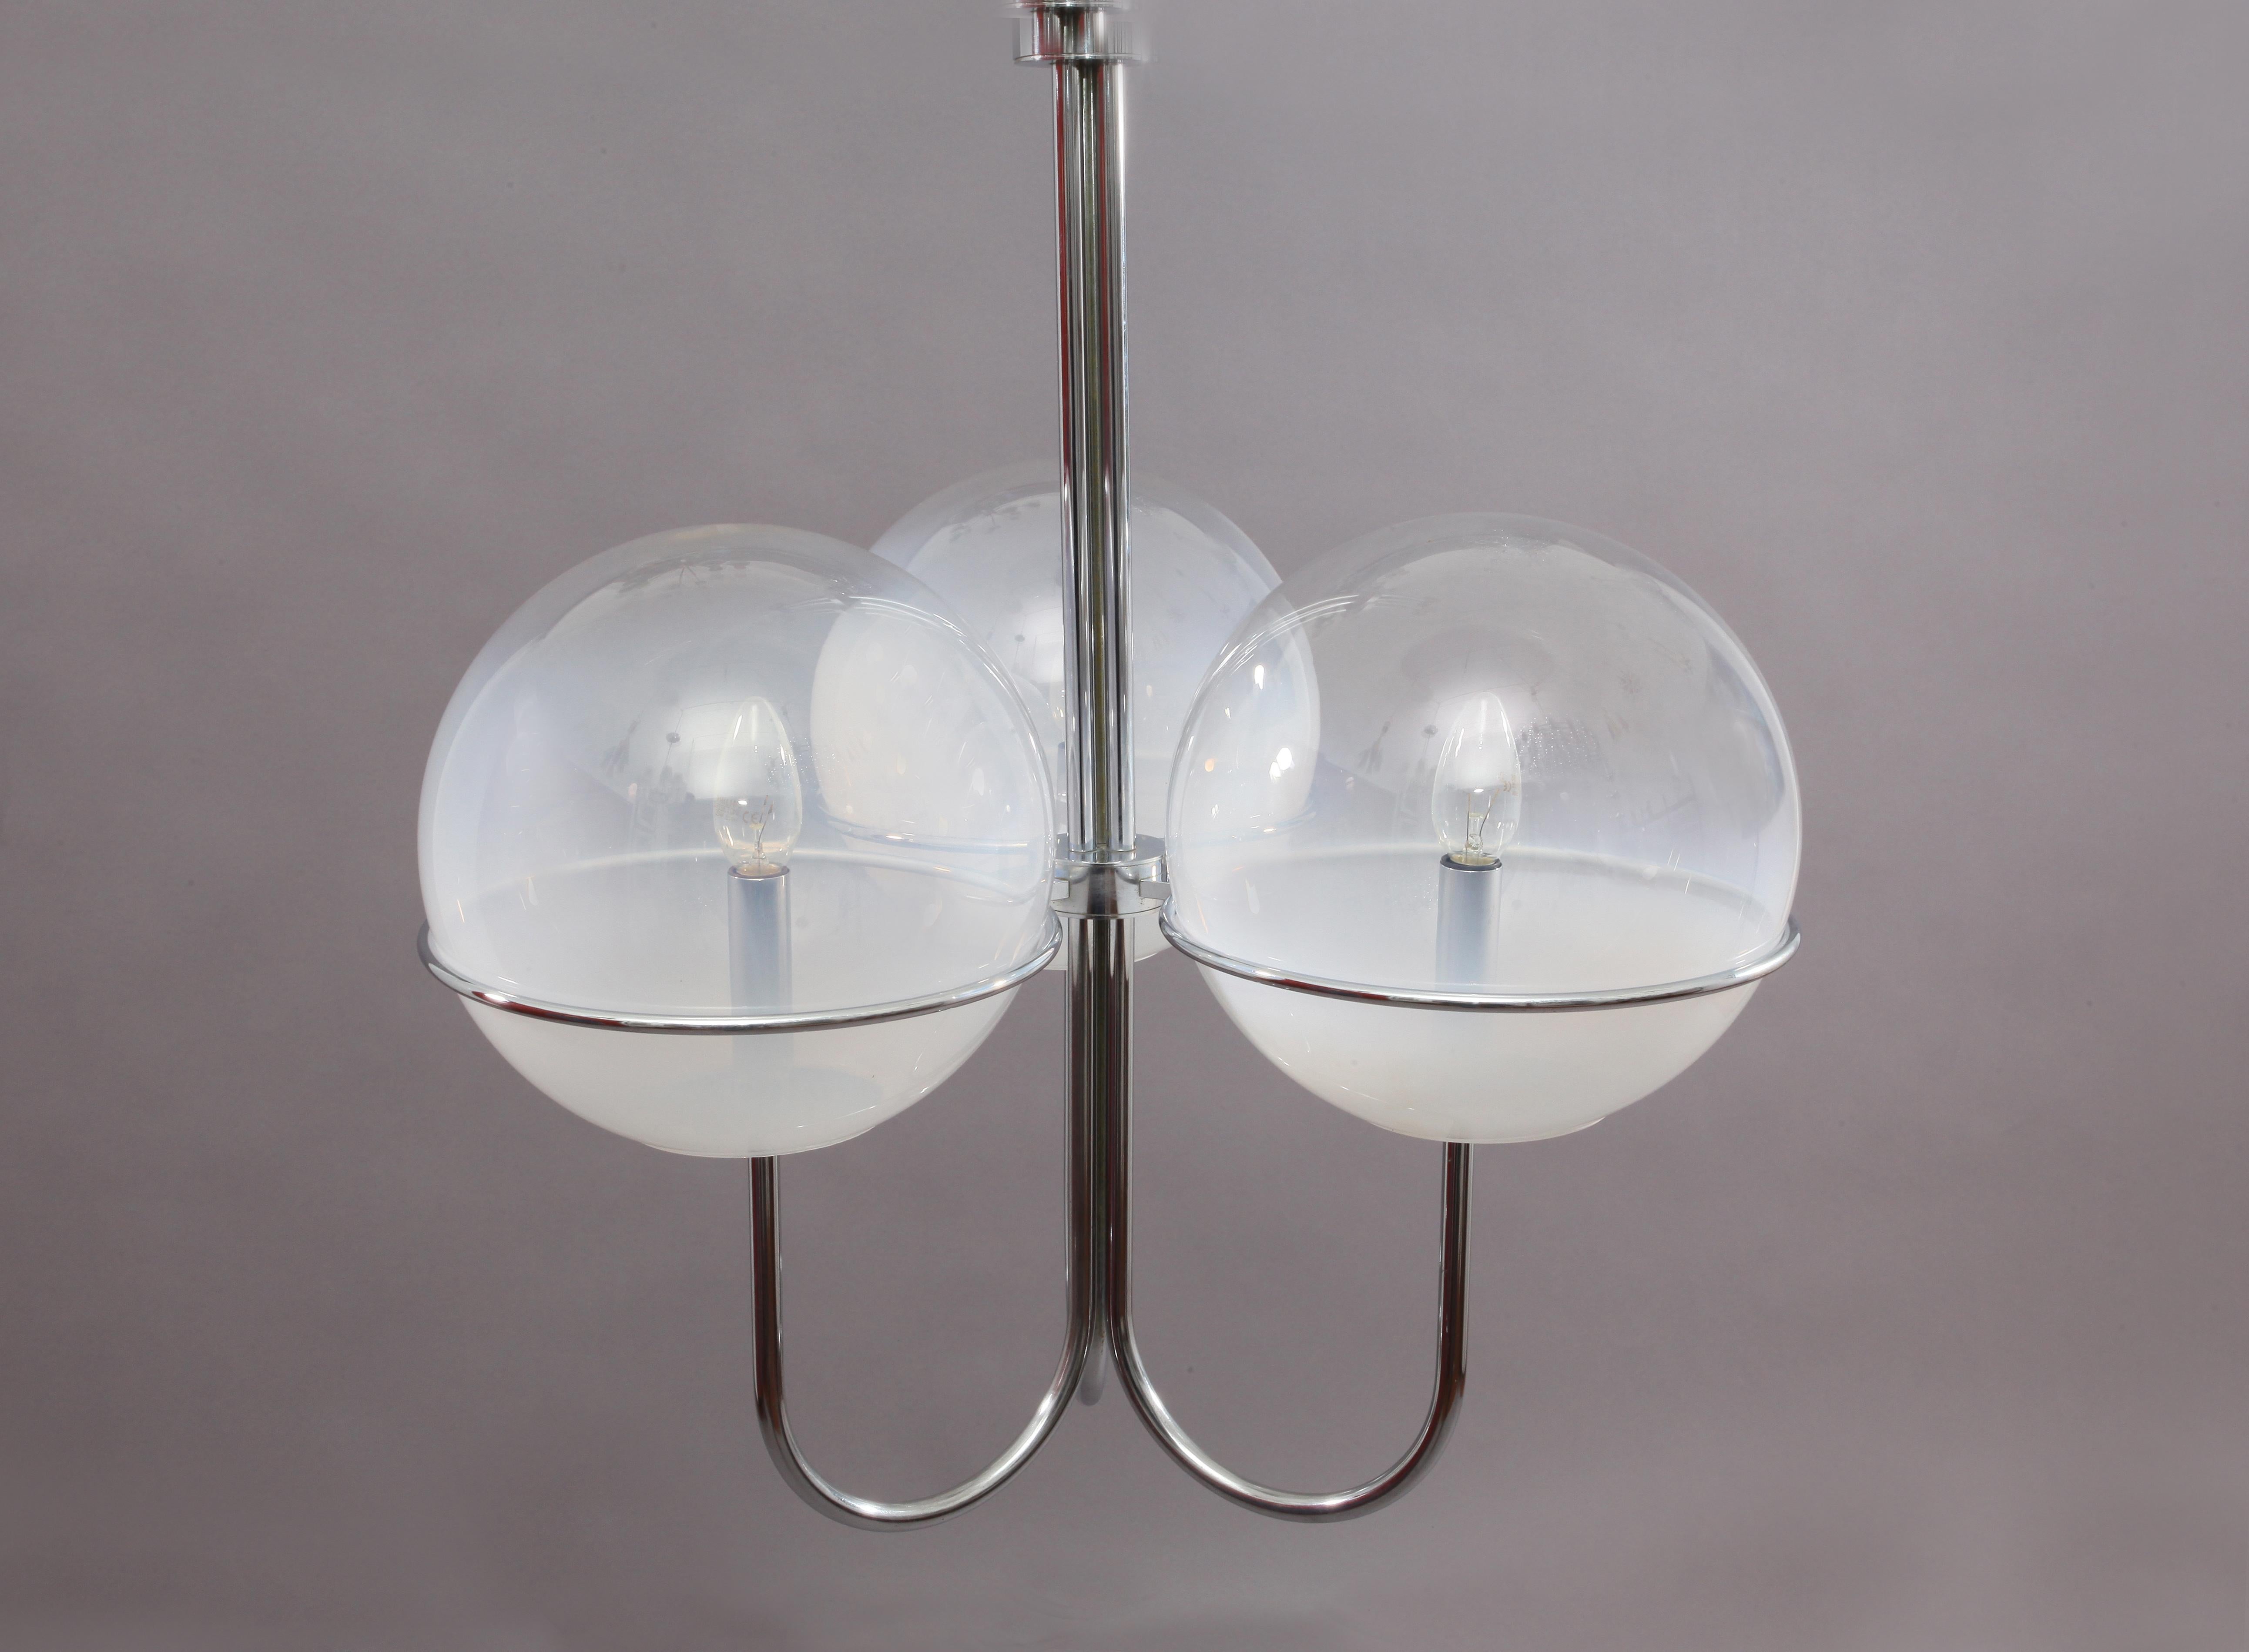 Chrome chandelier
Italy 1960
Mazzega Murano
three big opaline glass balls.